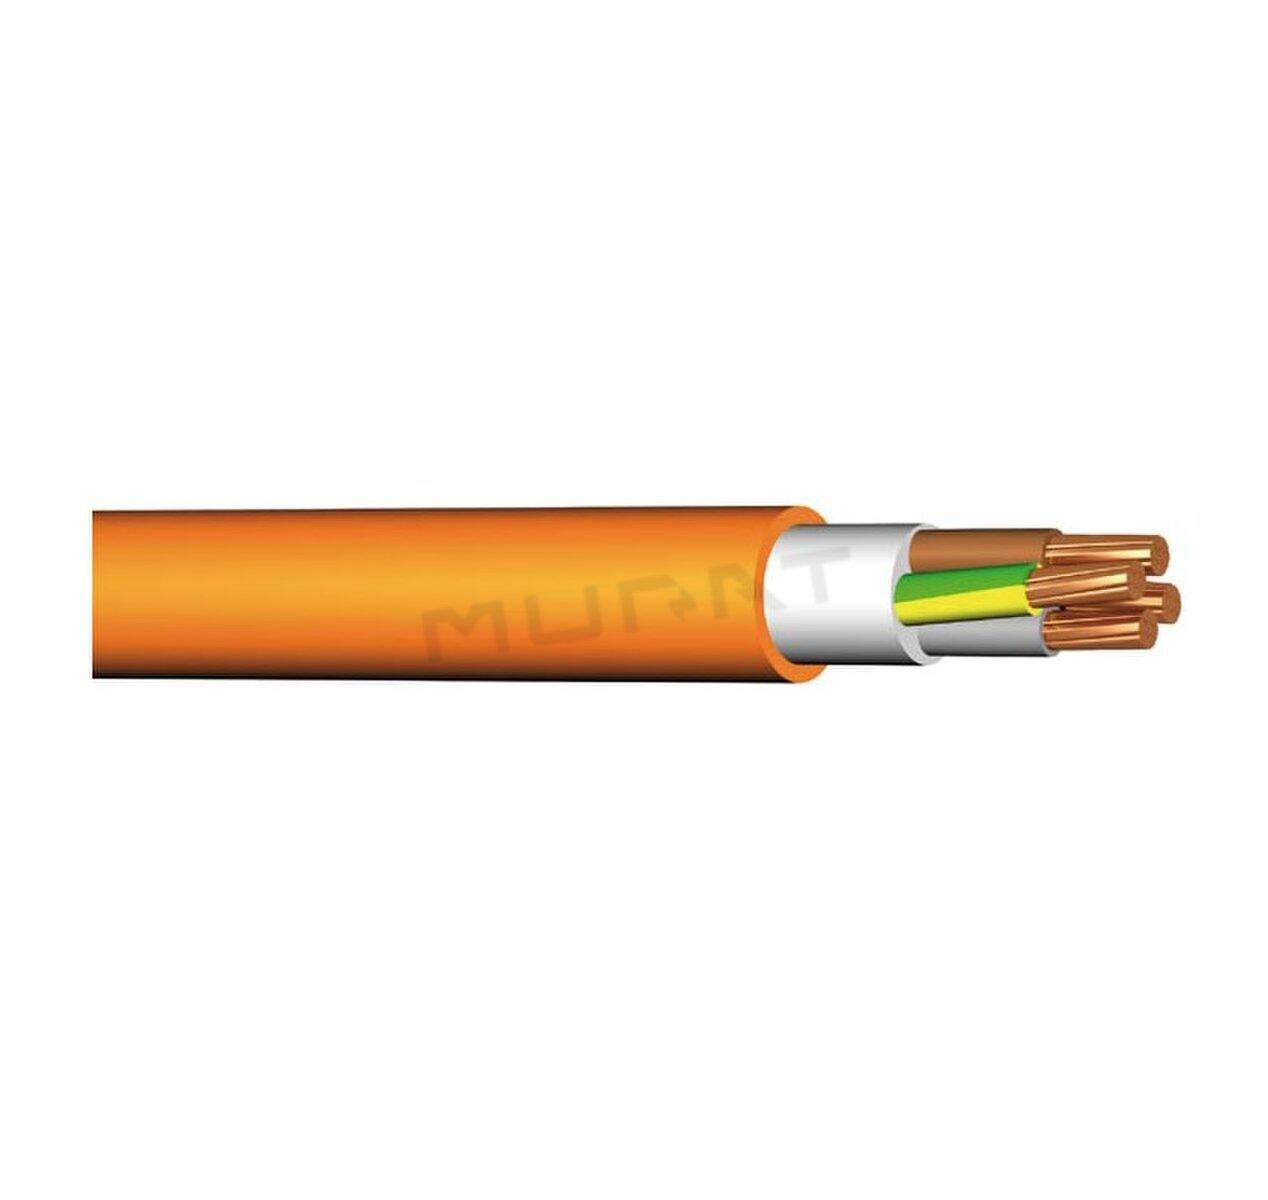 Kábel PRAFlaSafe X-J 4x185 mm2 SM B2ca s1d1a1